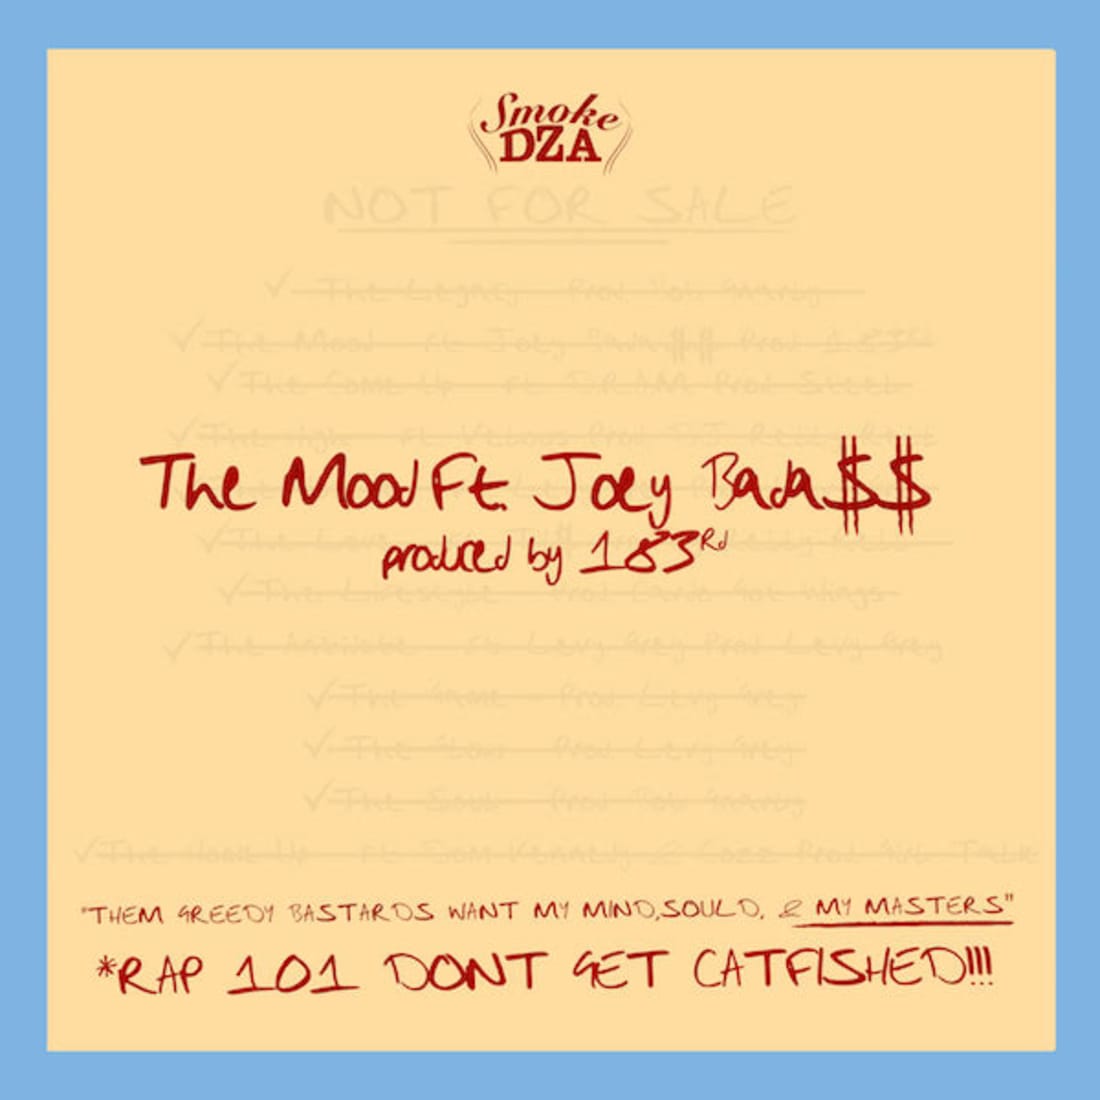 New Music: Smoke DZA – “The Mood” Feat. Joey Bada$$ [LISTEN]